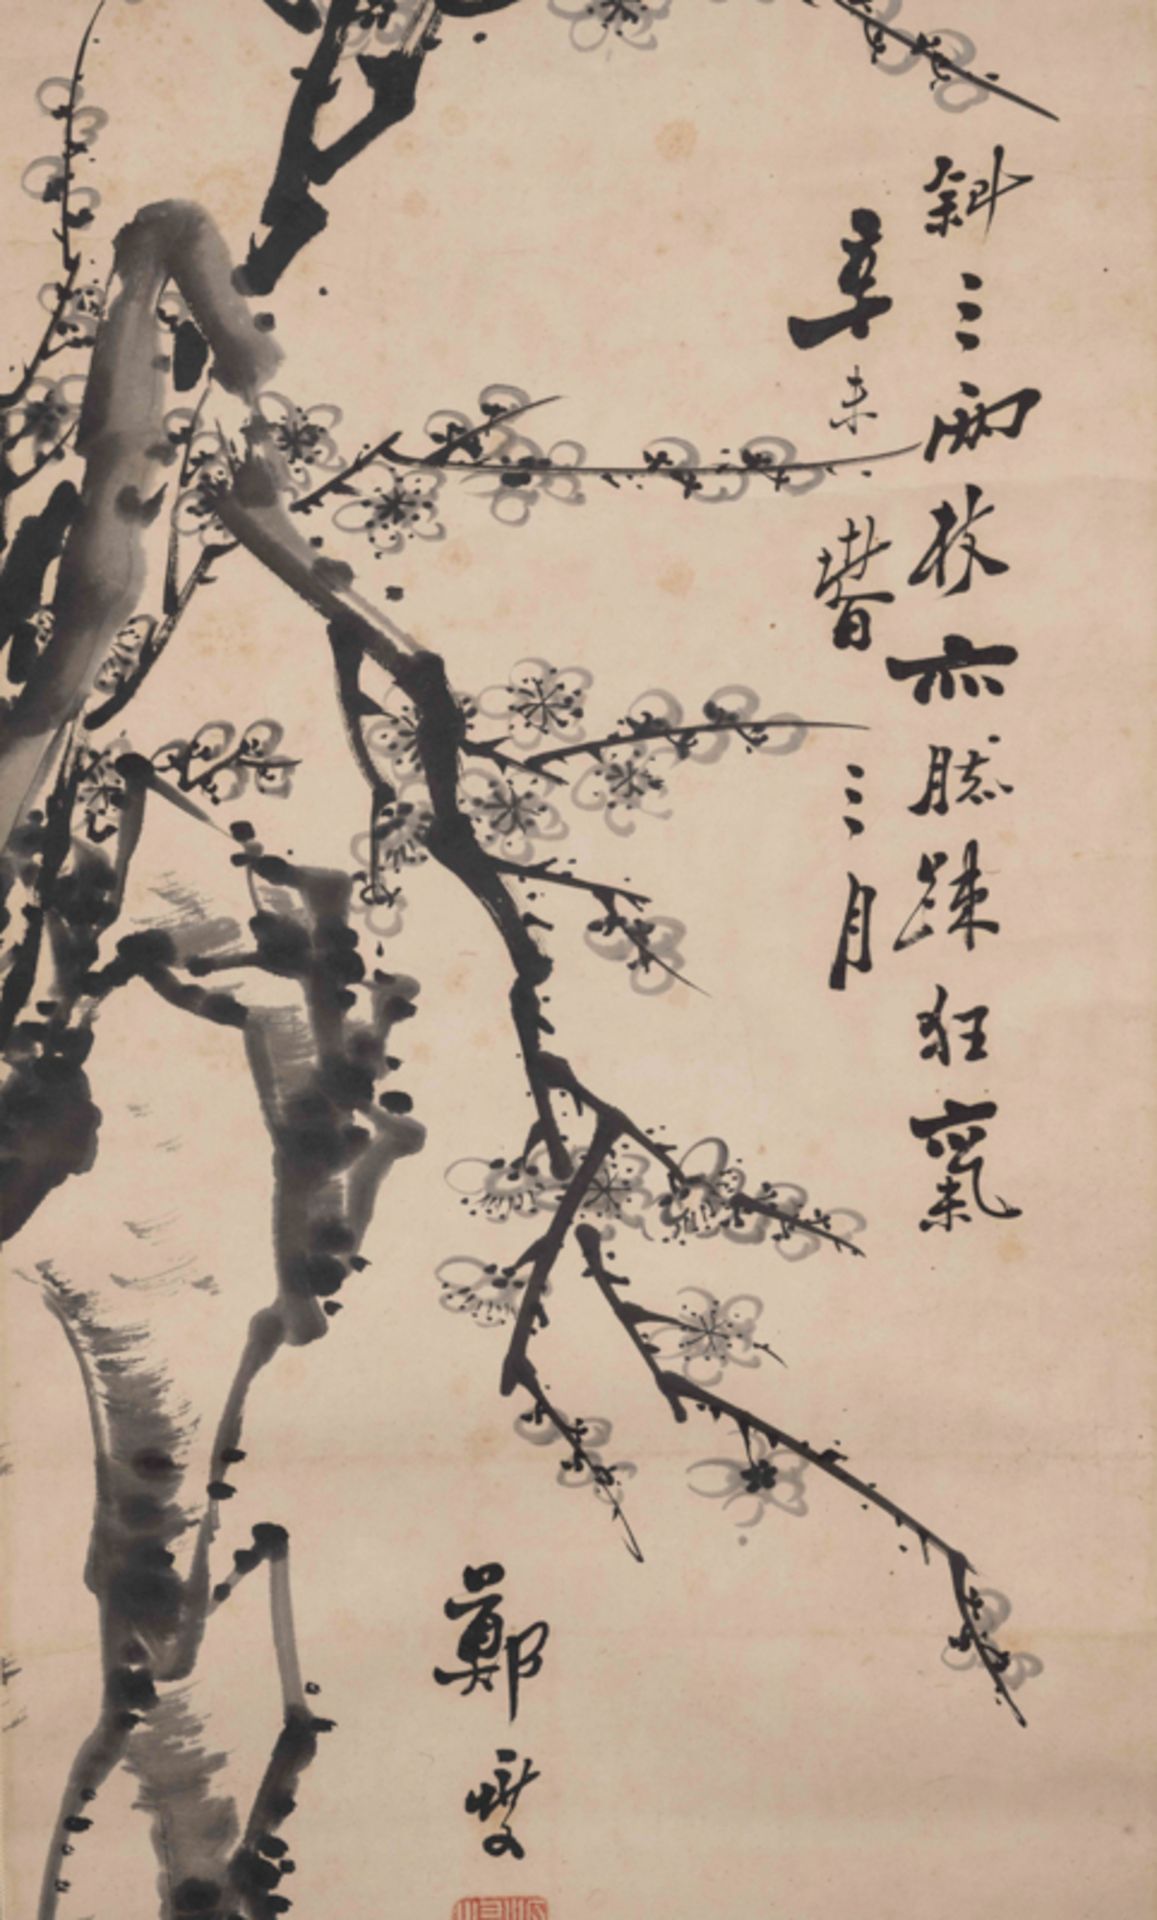 ZHENG BANQIAO (1693-1766), PLUM BLOSSOM 鄭板橋 墨梅 - Image 4 of 11